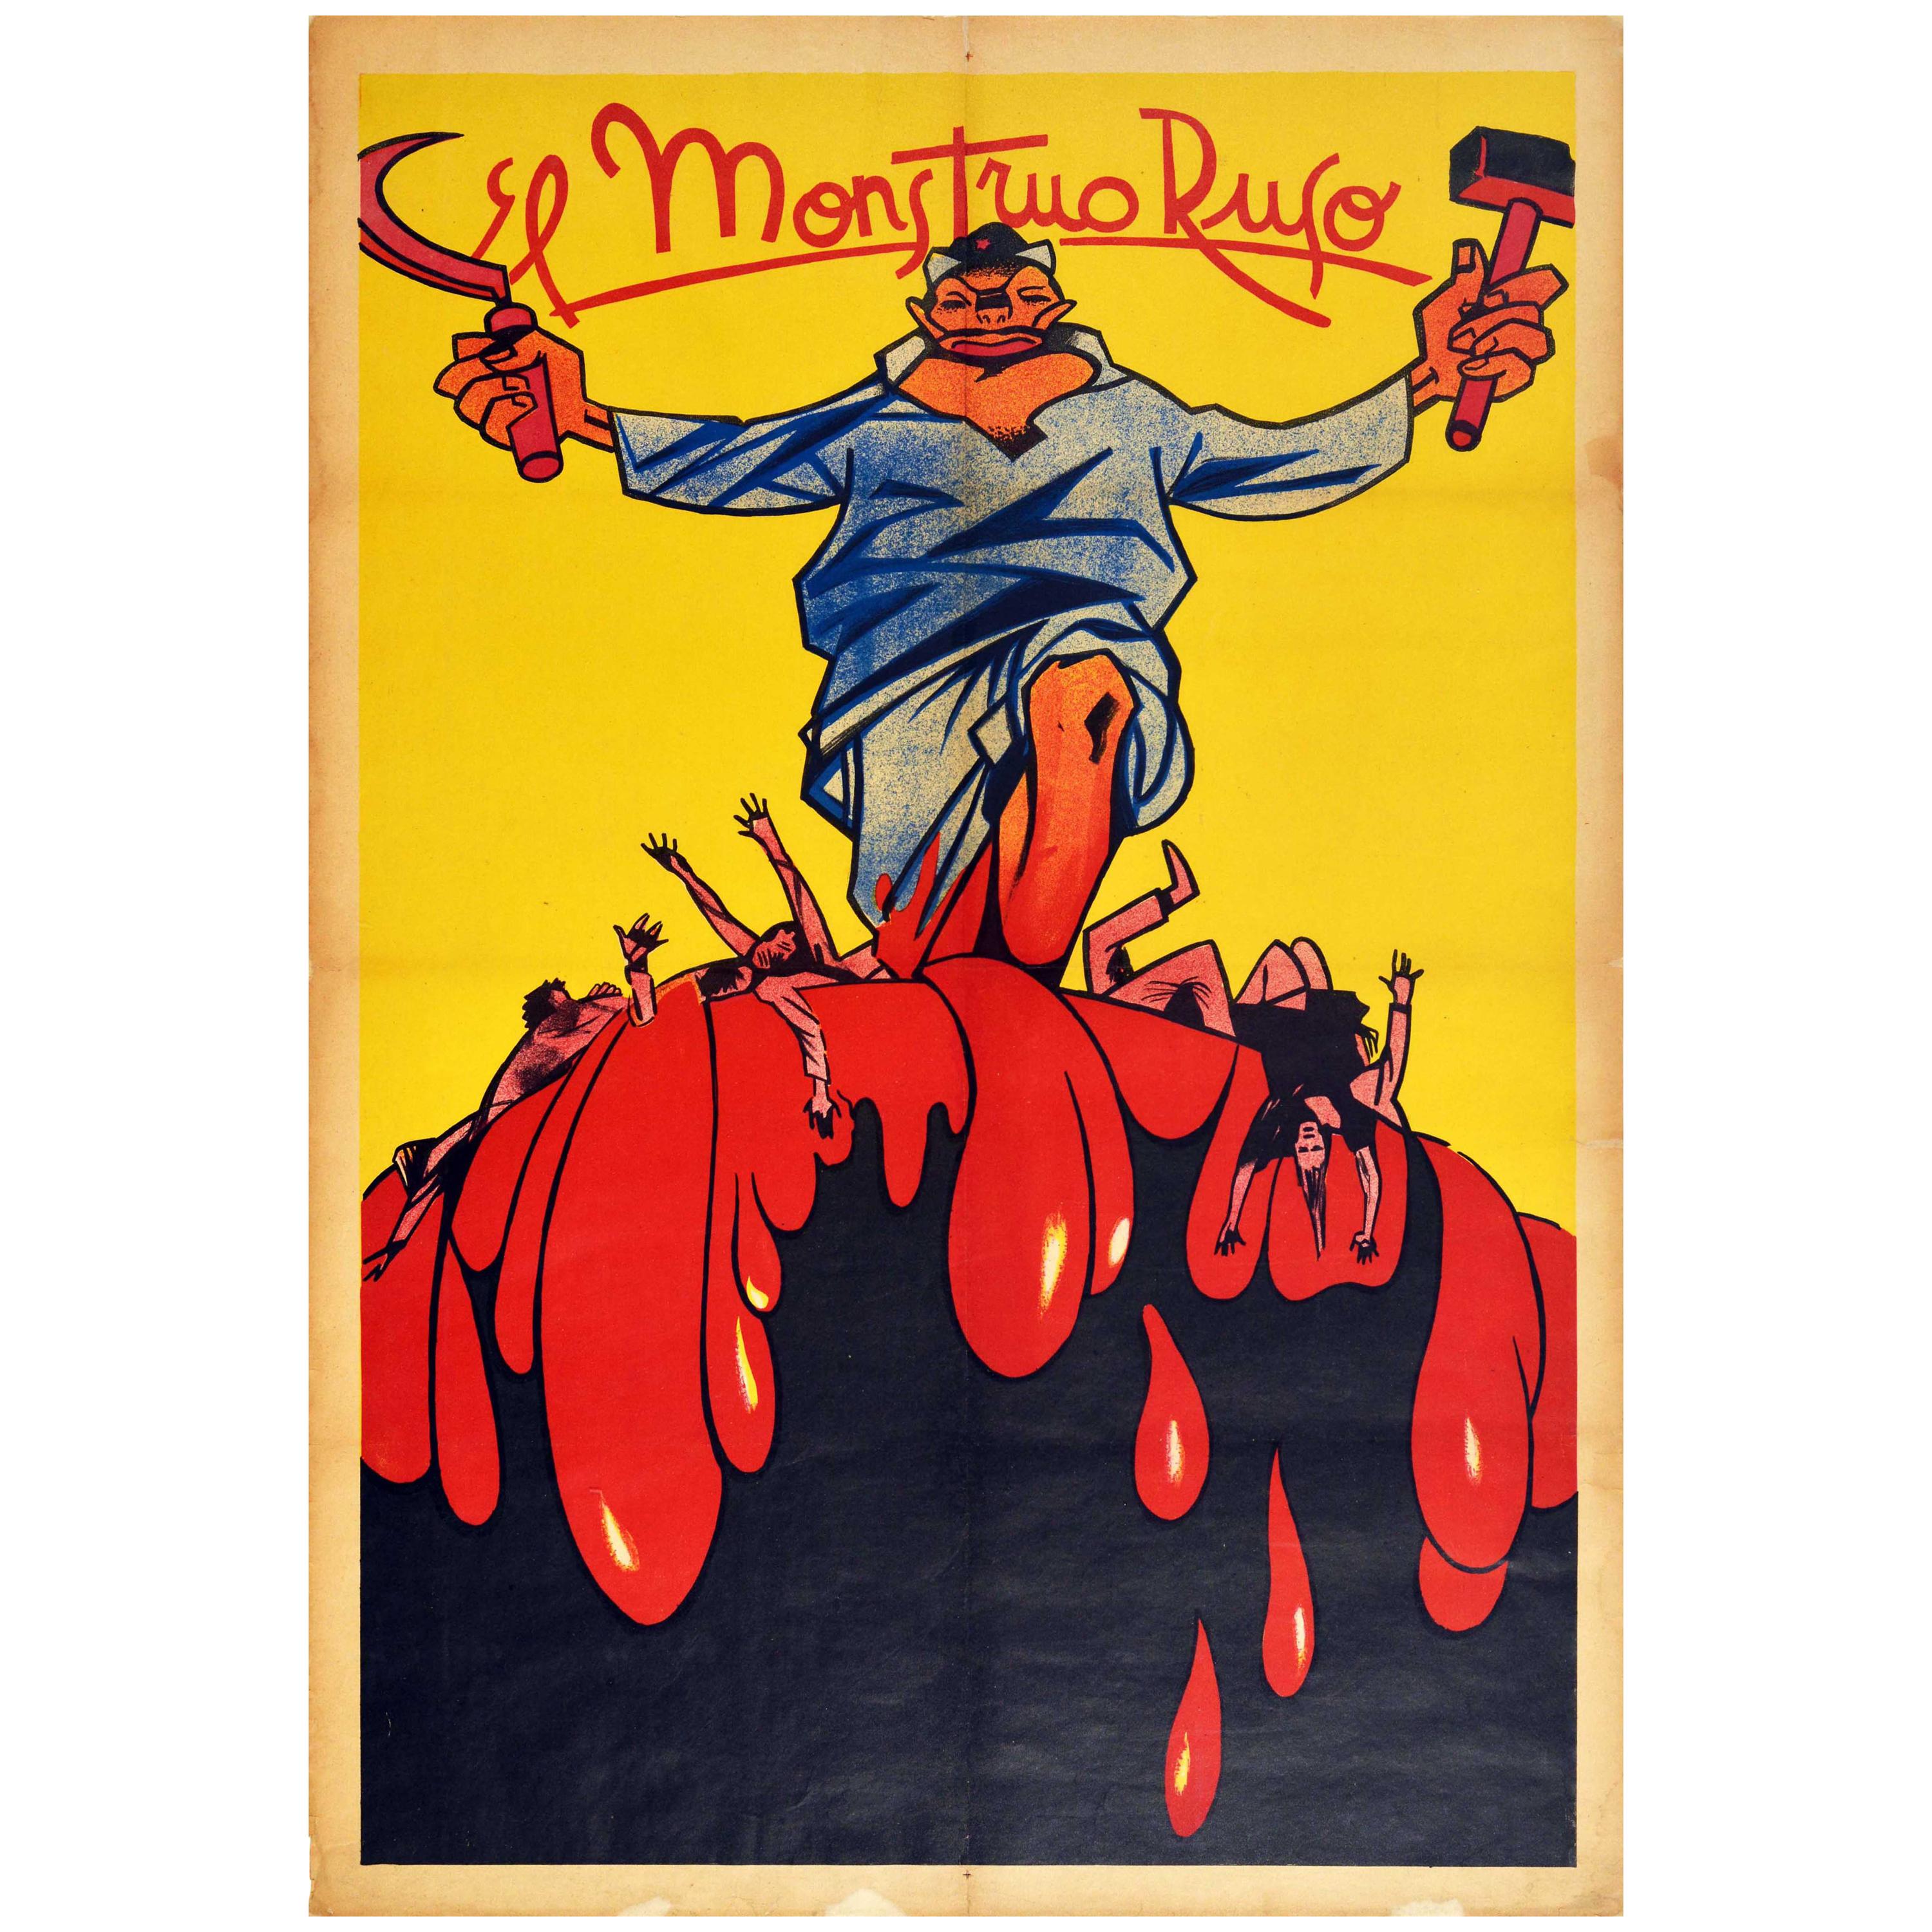 Original Vintage-Poster, Spanisches Bürgerkriegsplakat, El Monstruo Ruso, Das russische Monster im Angebot